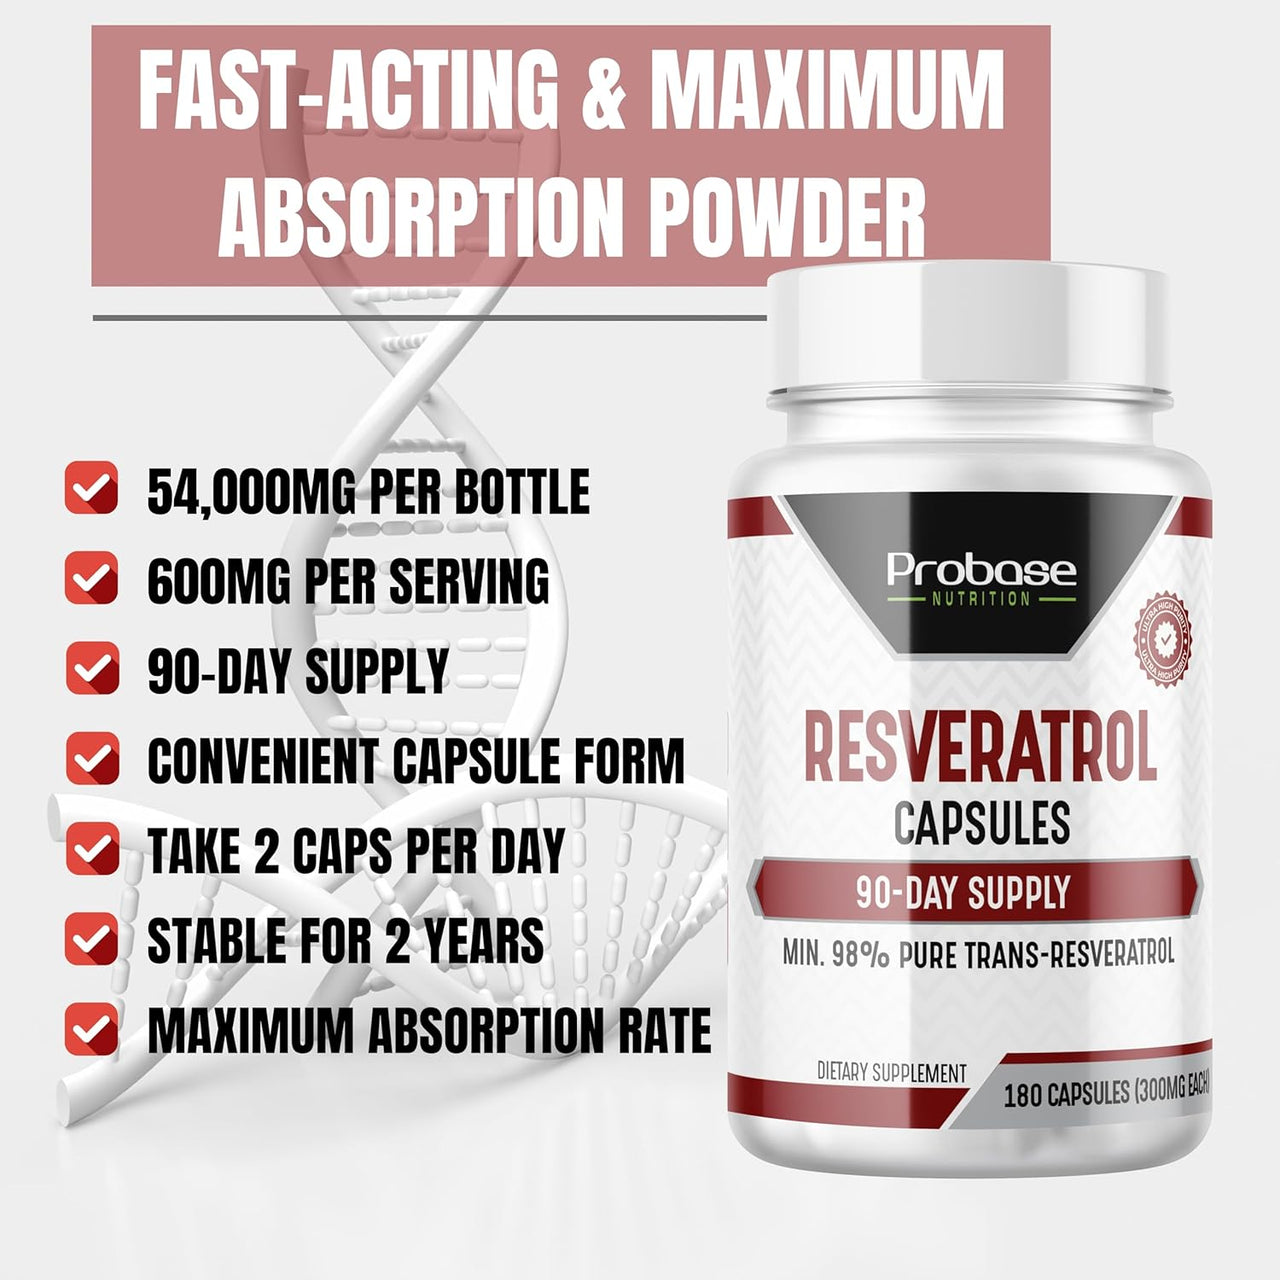 Probase Nutrition Ultra High Purity Resveratrol Capsules - 98% Trans-Resveratrol - 180 Caps